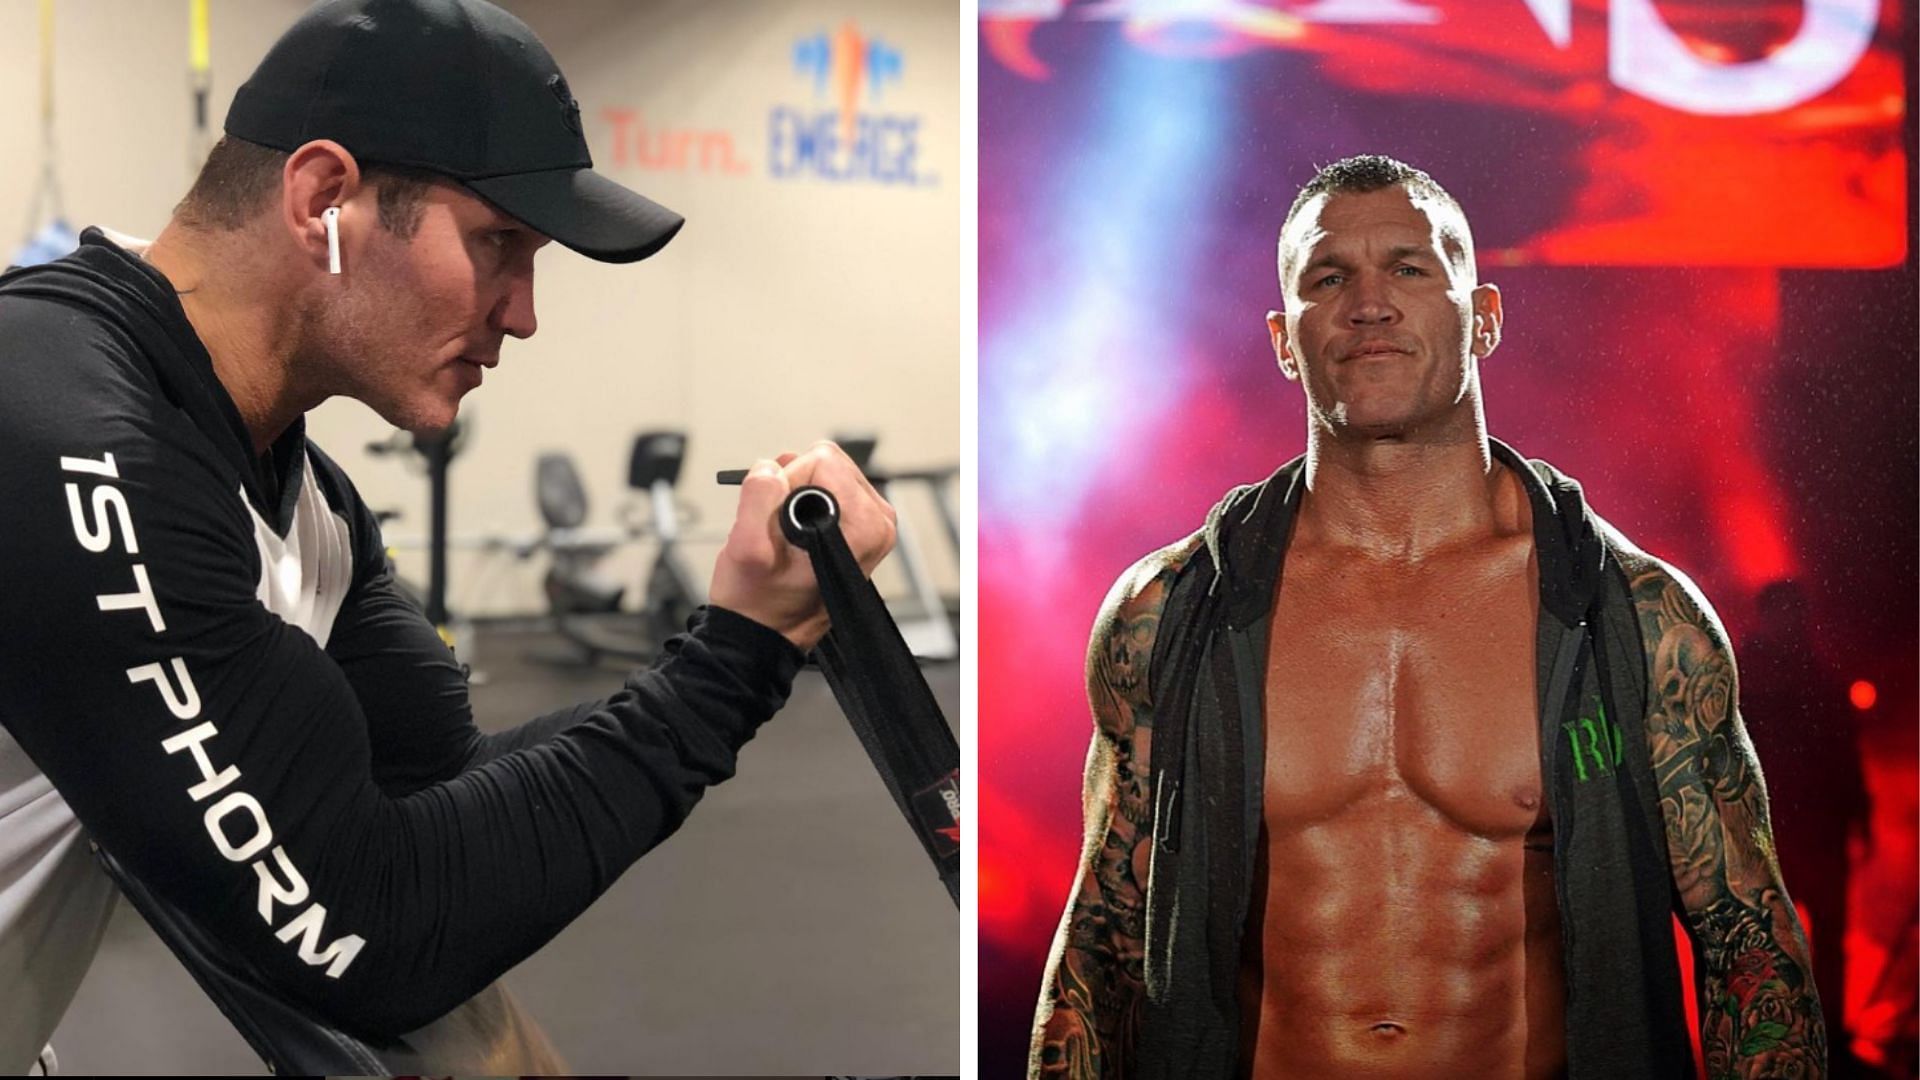 Randy Orton is a former WWE Universal Champion